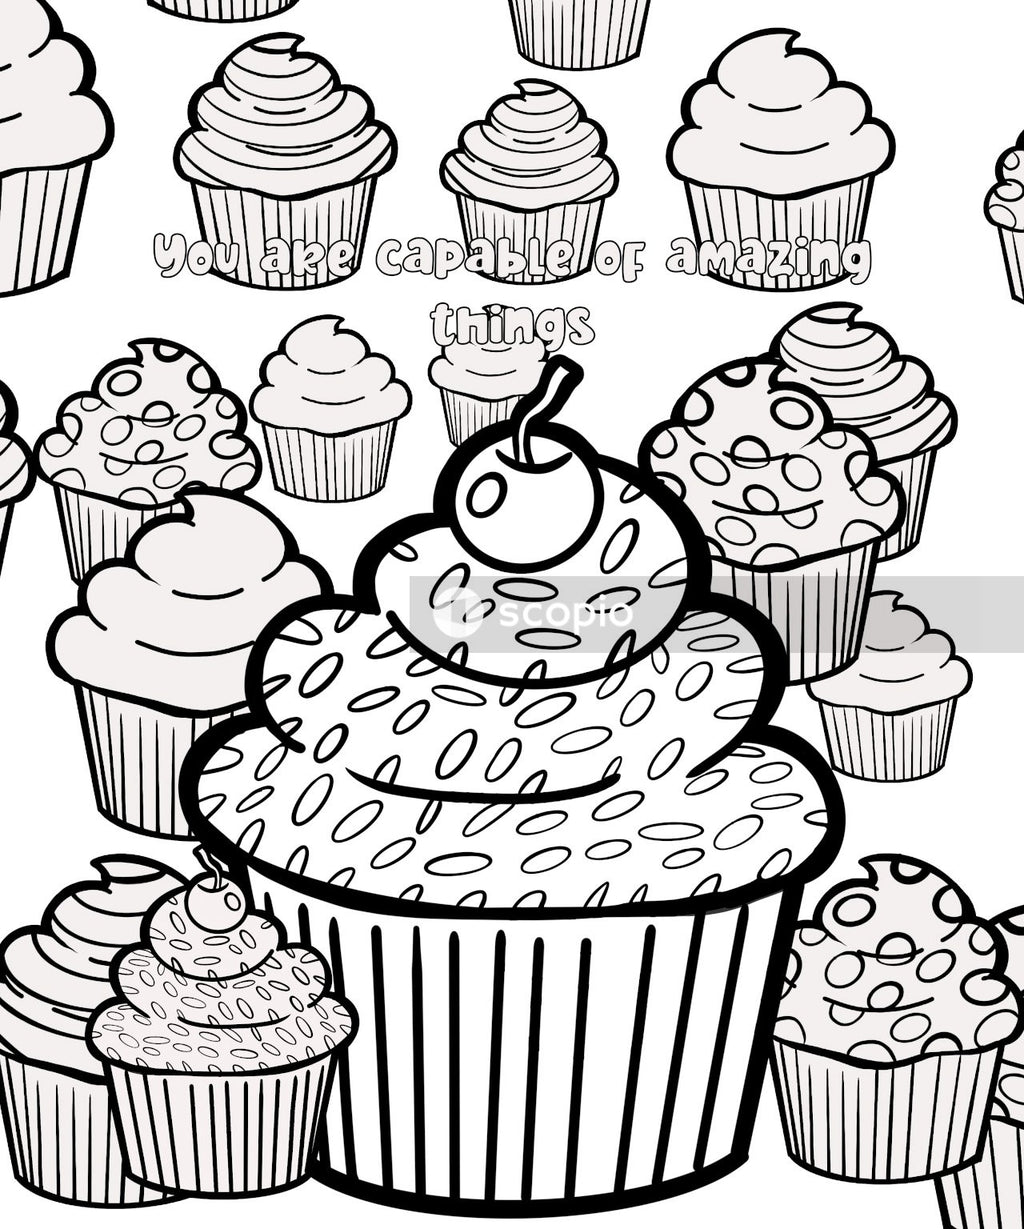 White and black cupcake illustration